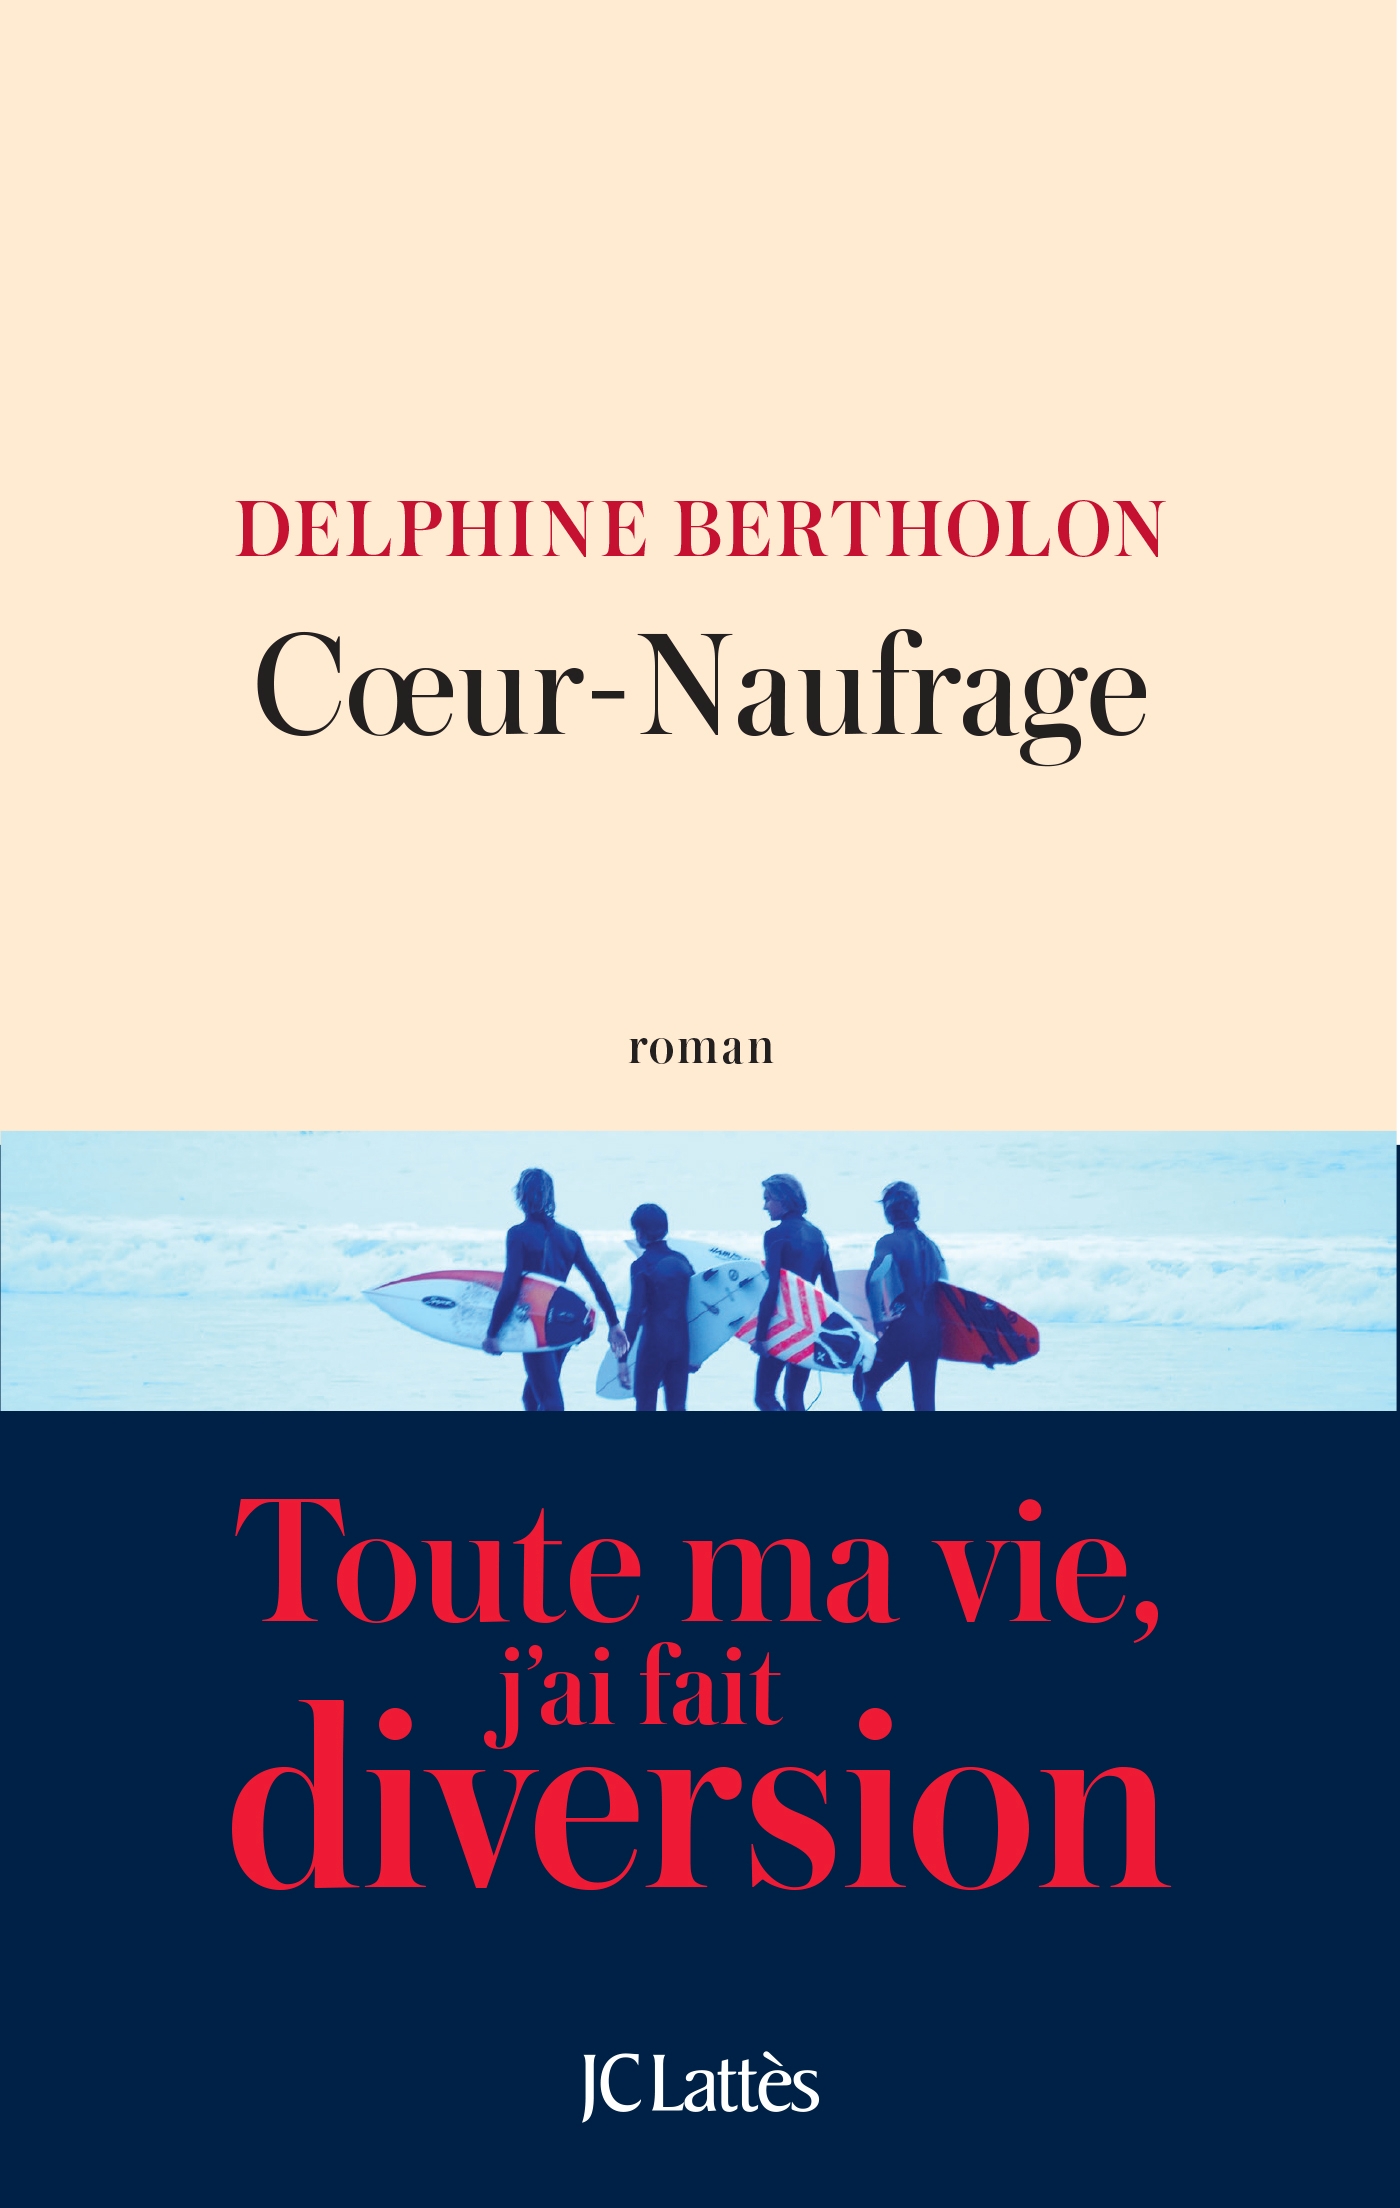 Coeur Naufrage – Delphine Bertholon